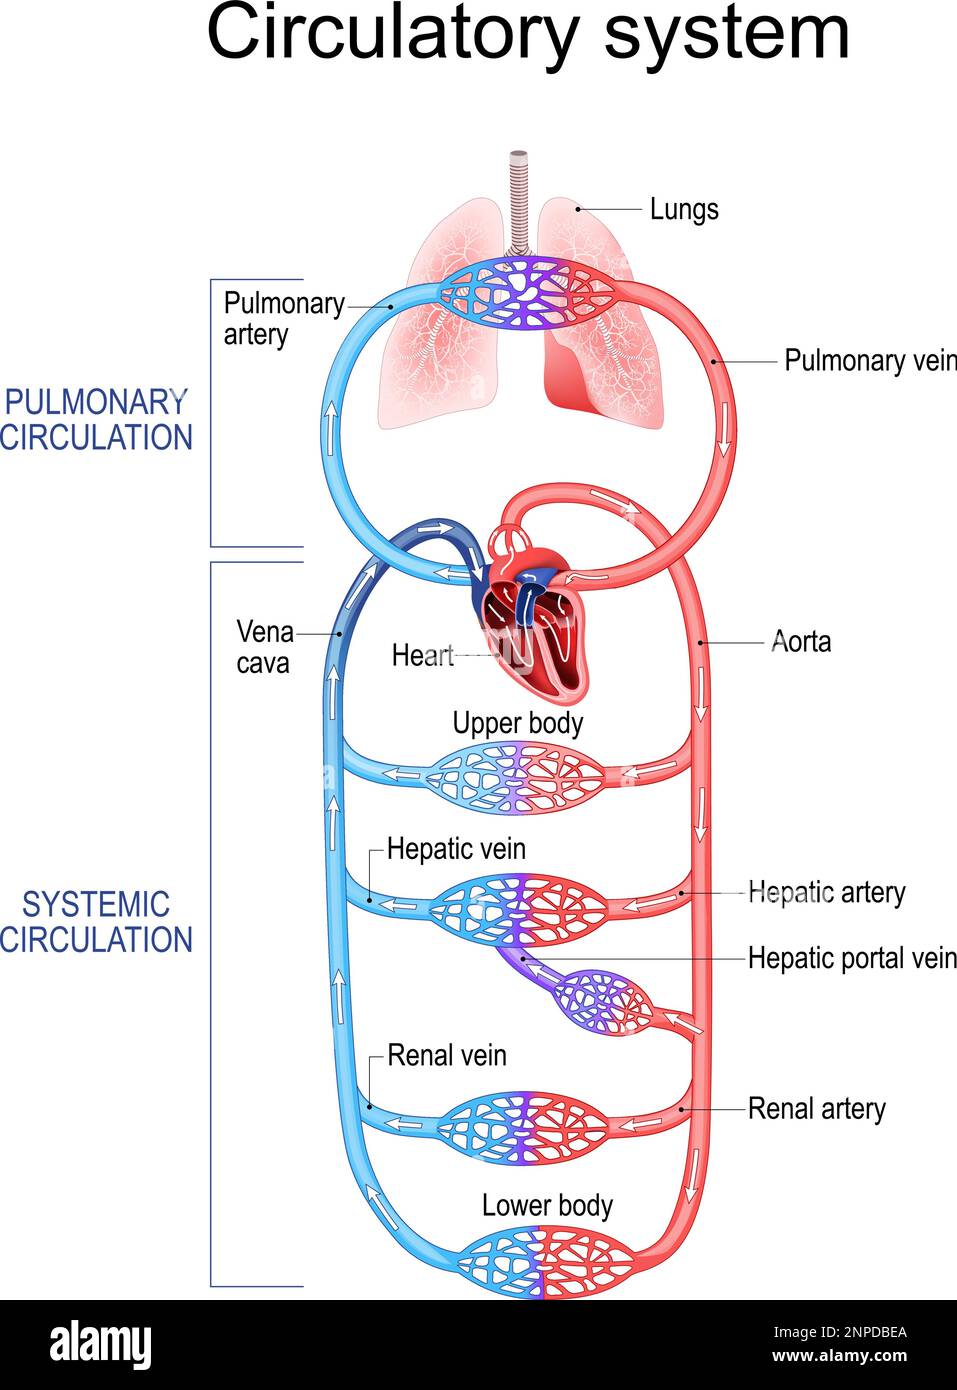 Circulatory system. Human bloodstream. Pulmonary Circulation in lungs, and Systemic Circulation in Renal artery, Hepatic portal vein, Aorta, Vena cava Stock Vector